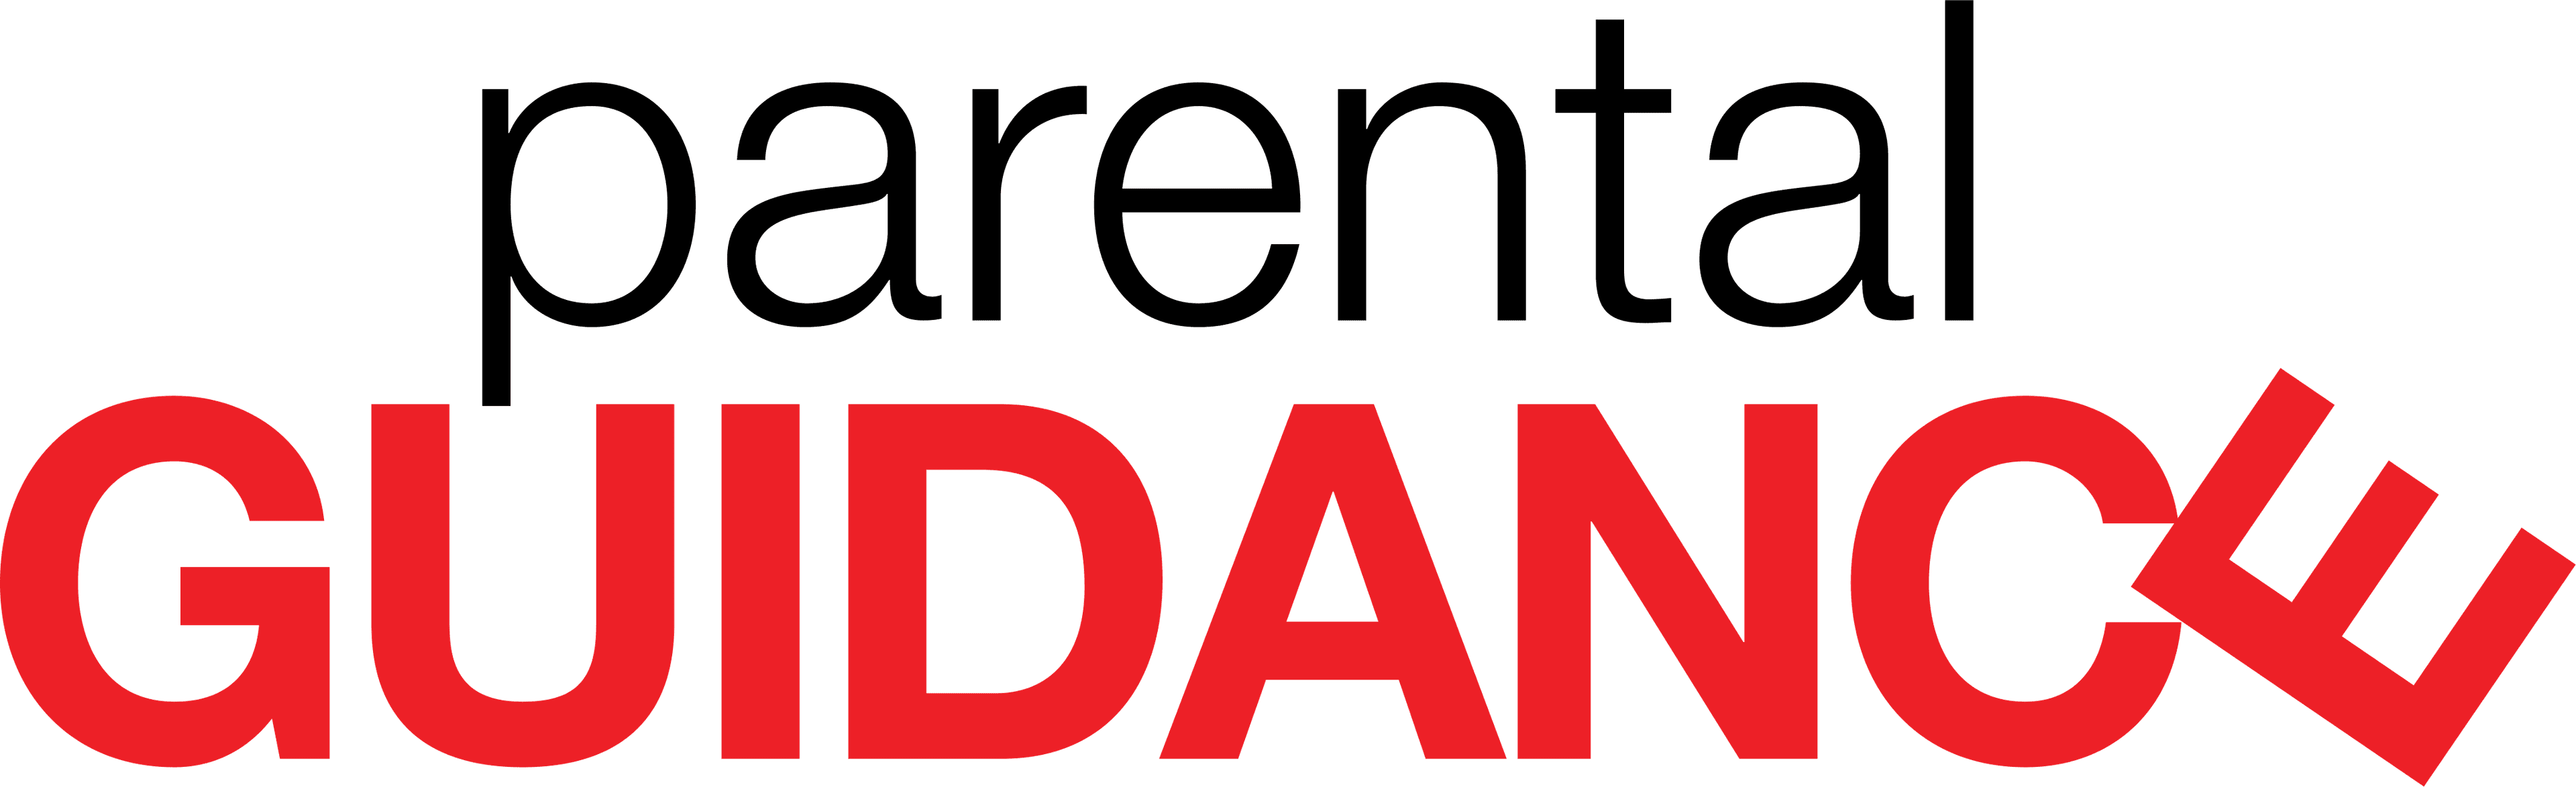 Parental Guidance logo